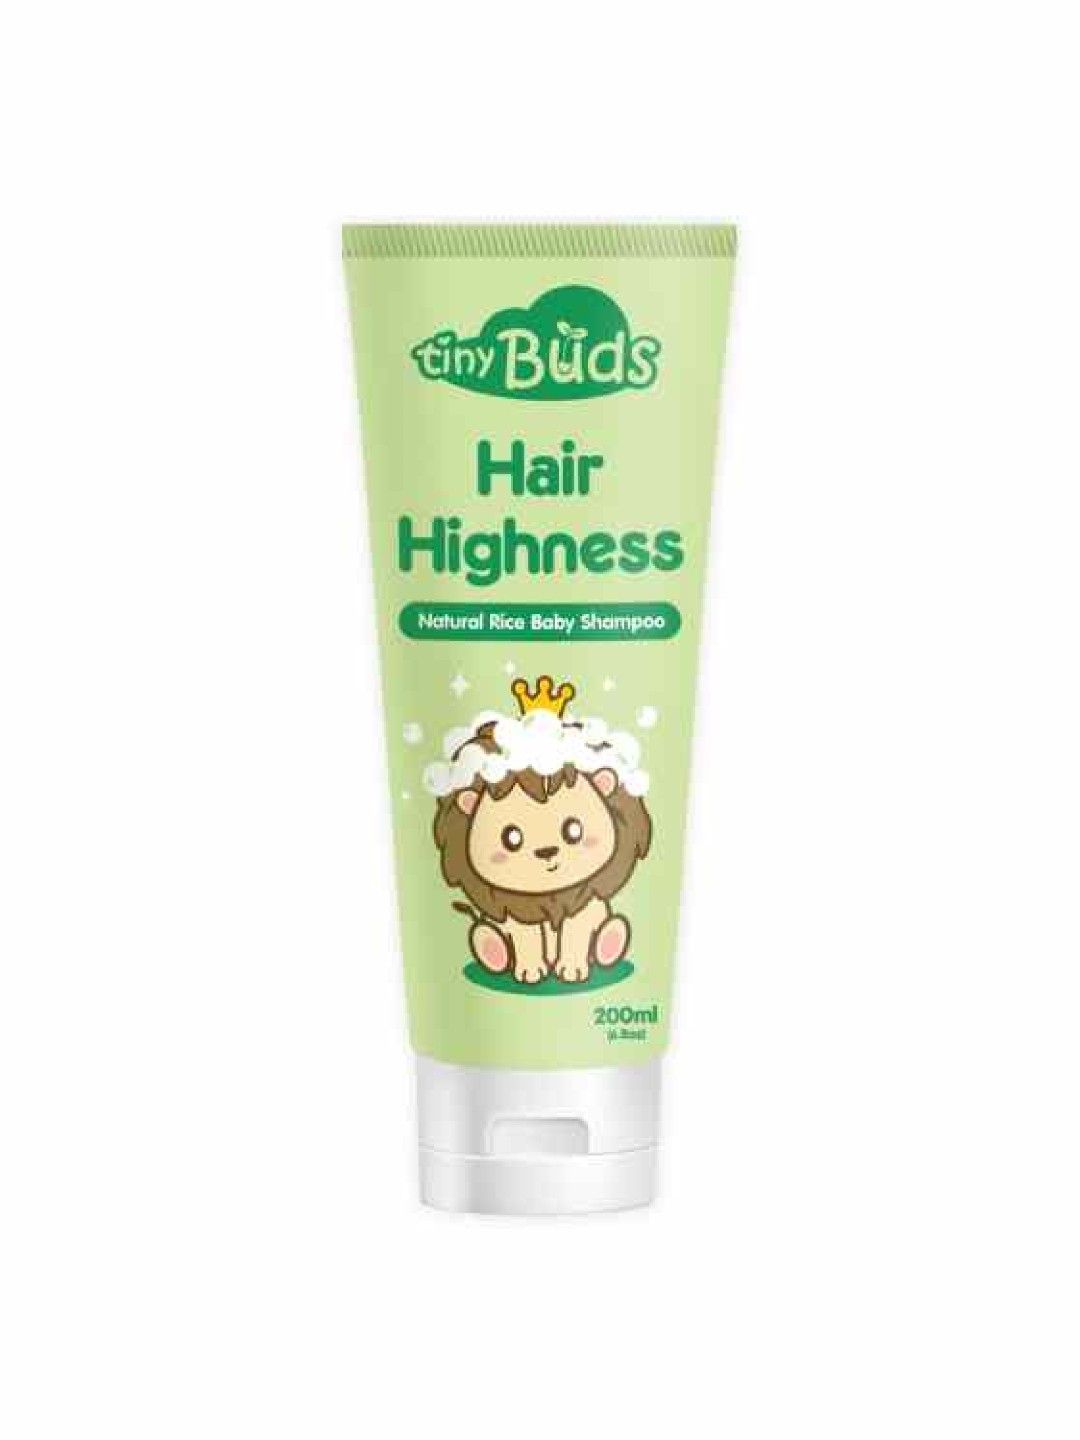 Tiny Buds Hair Highness Natural Rice Baby Shampoo (200ml)